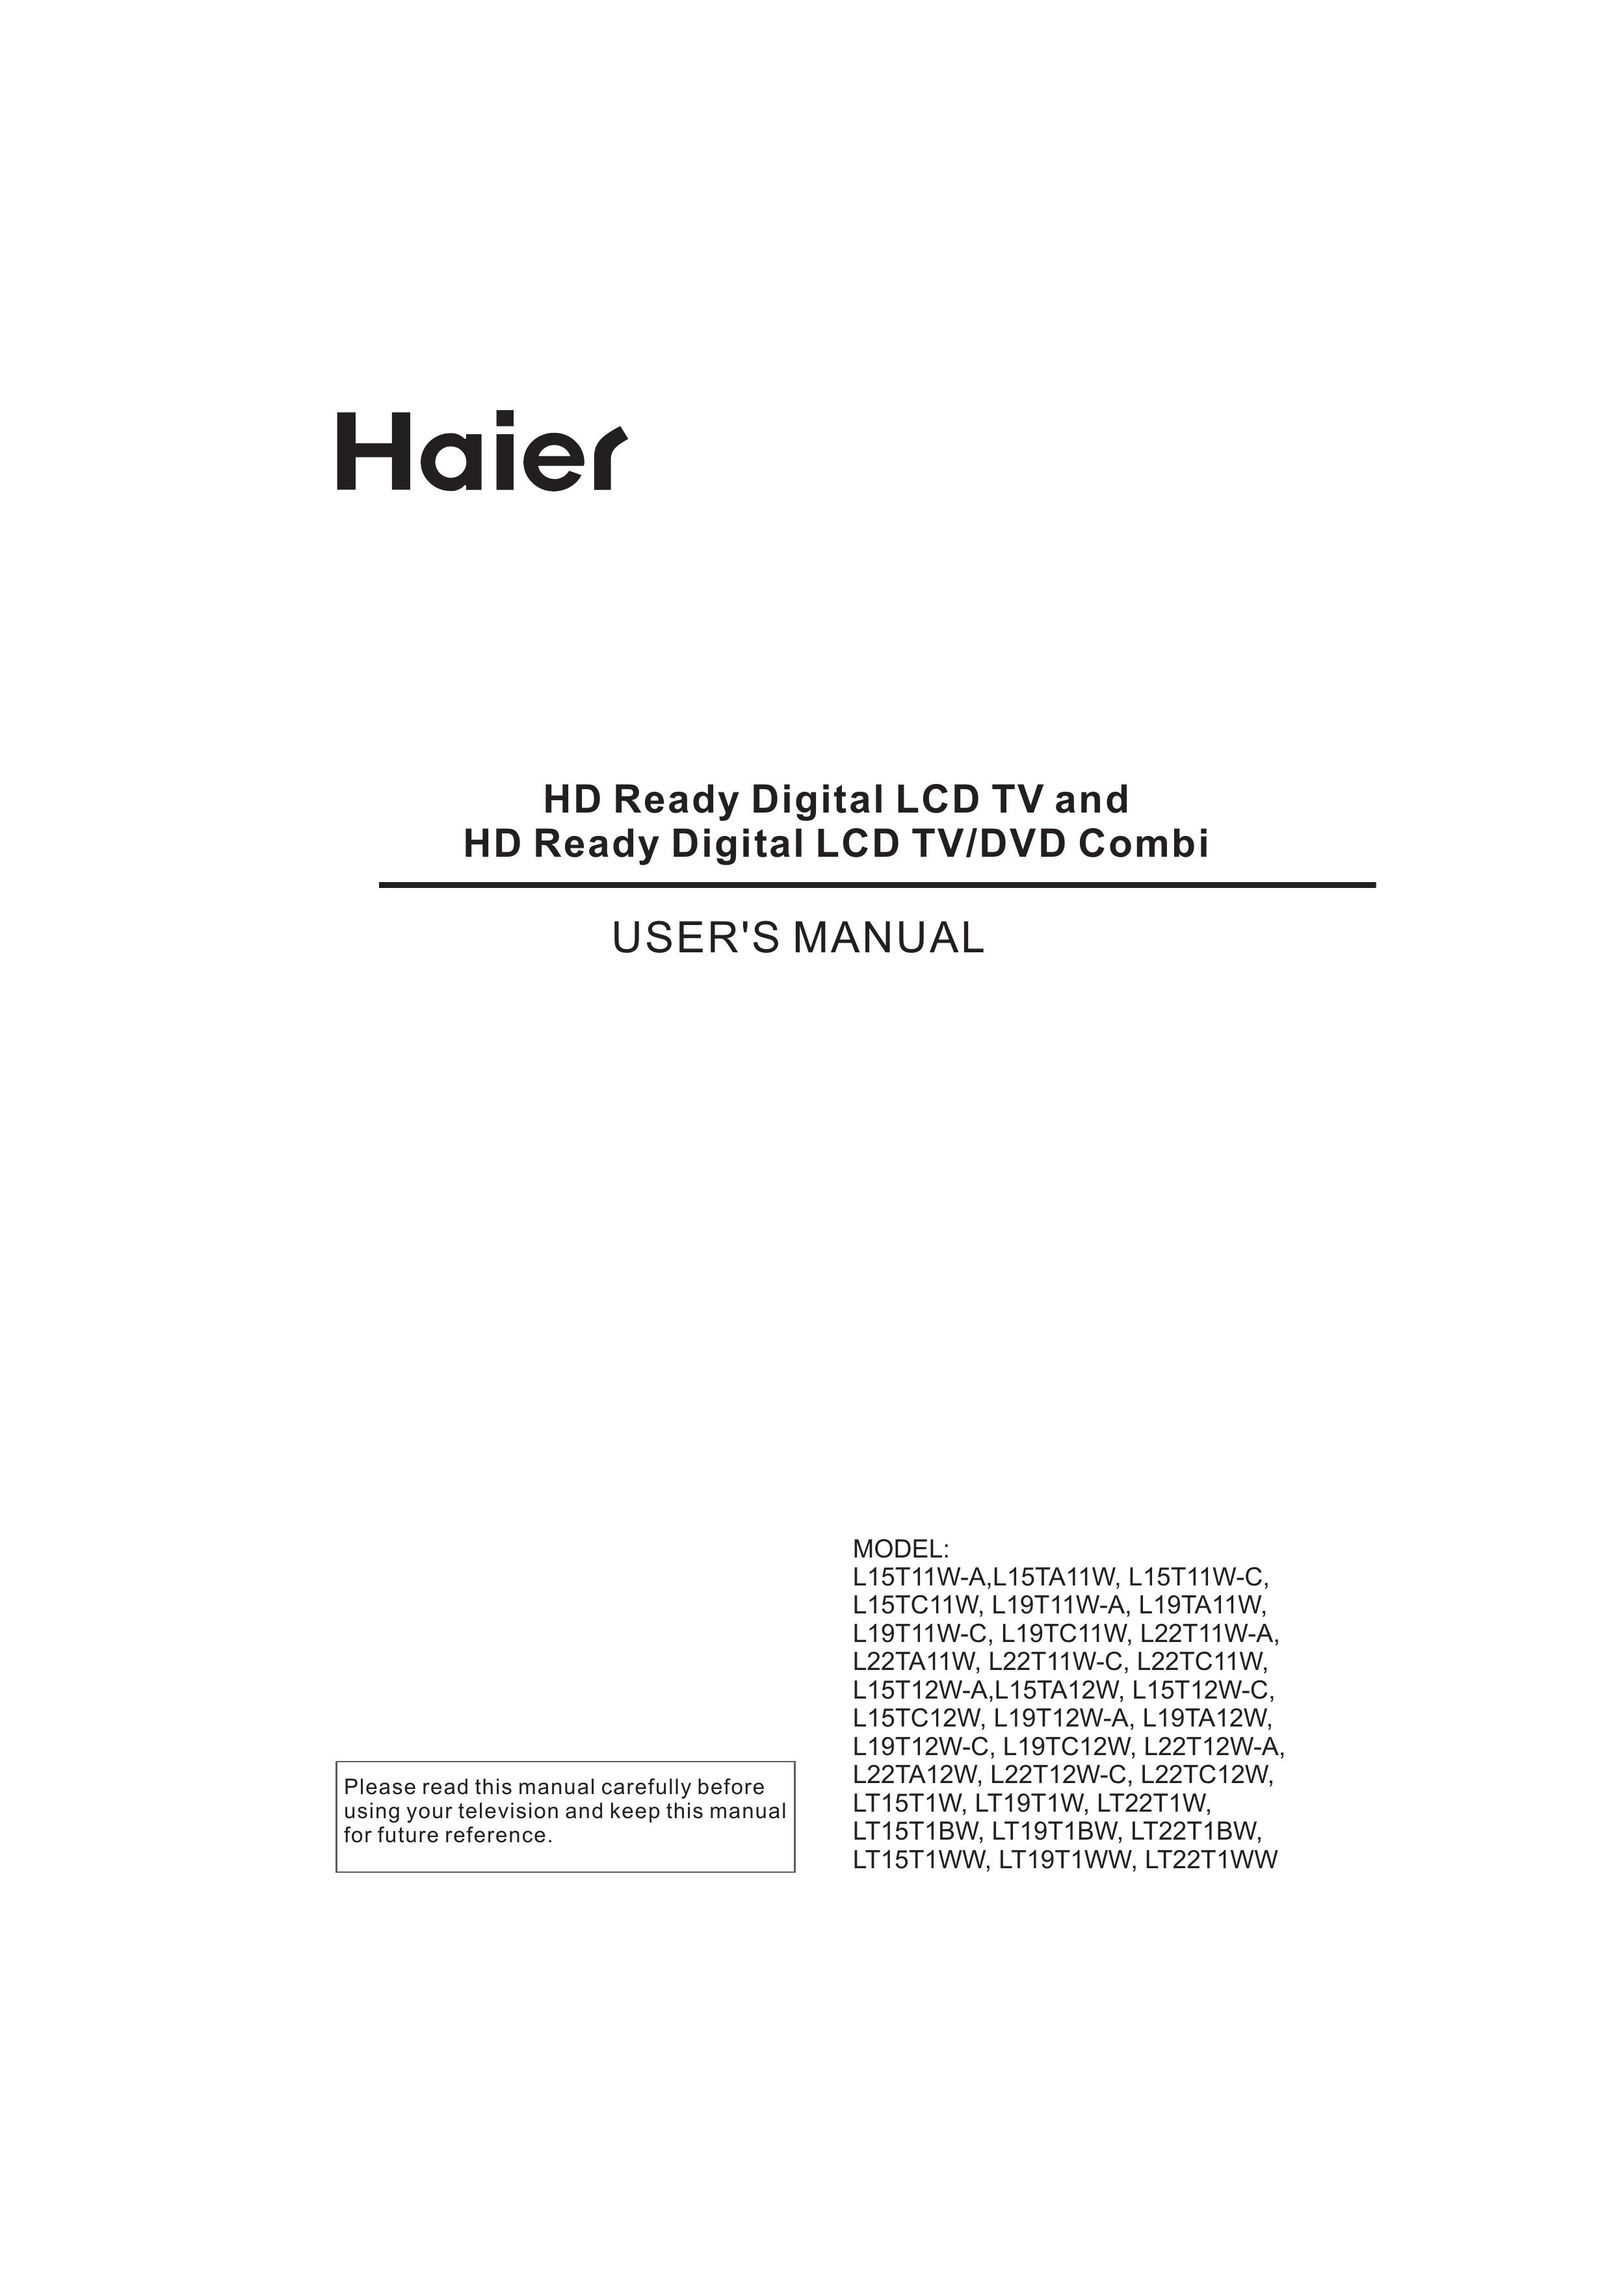 Haier L15TA11W TV DVD Combo User Manual